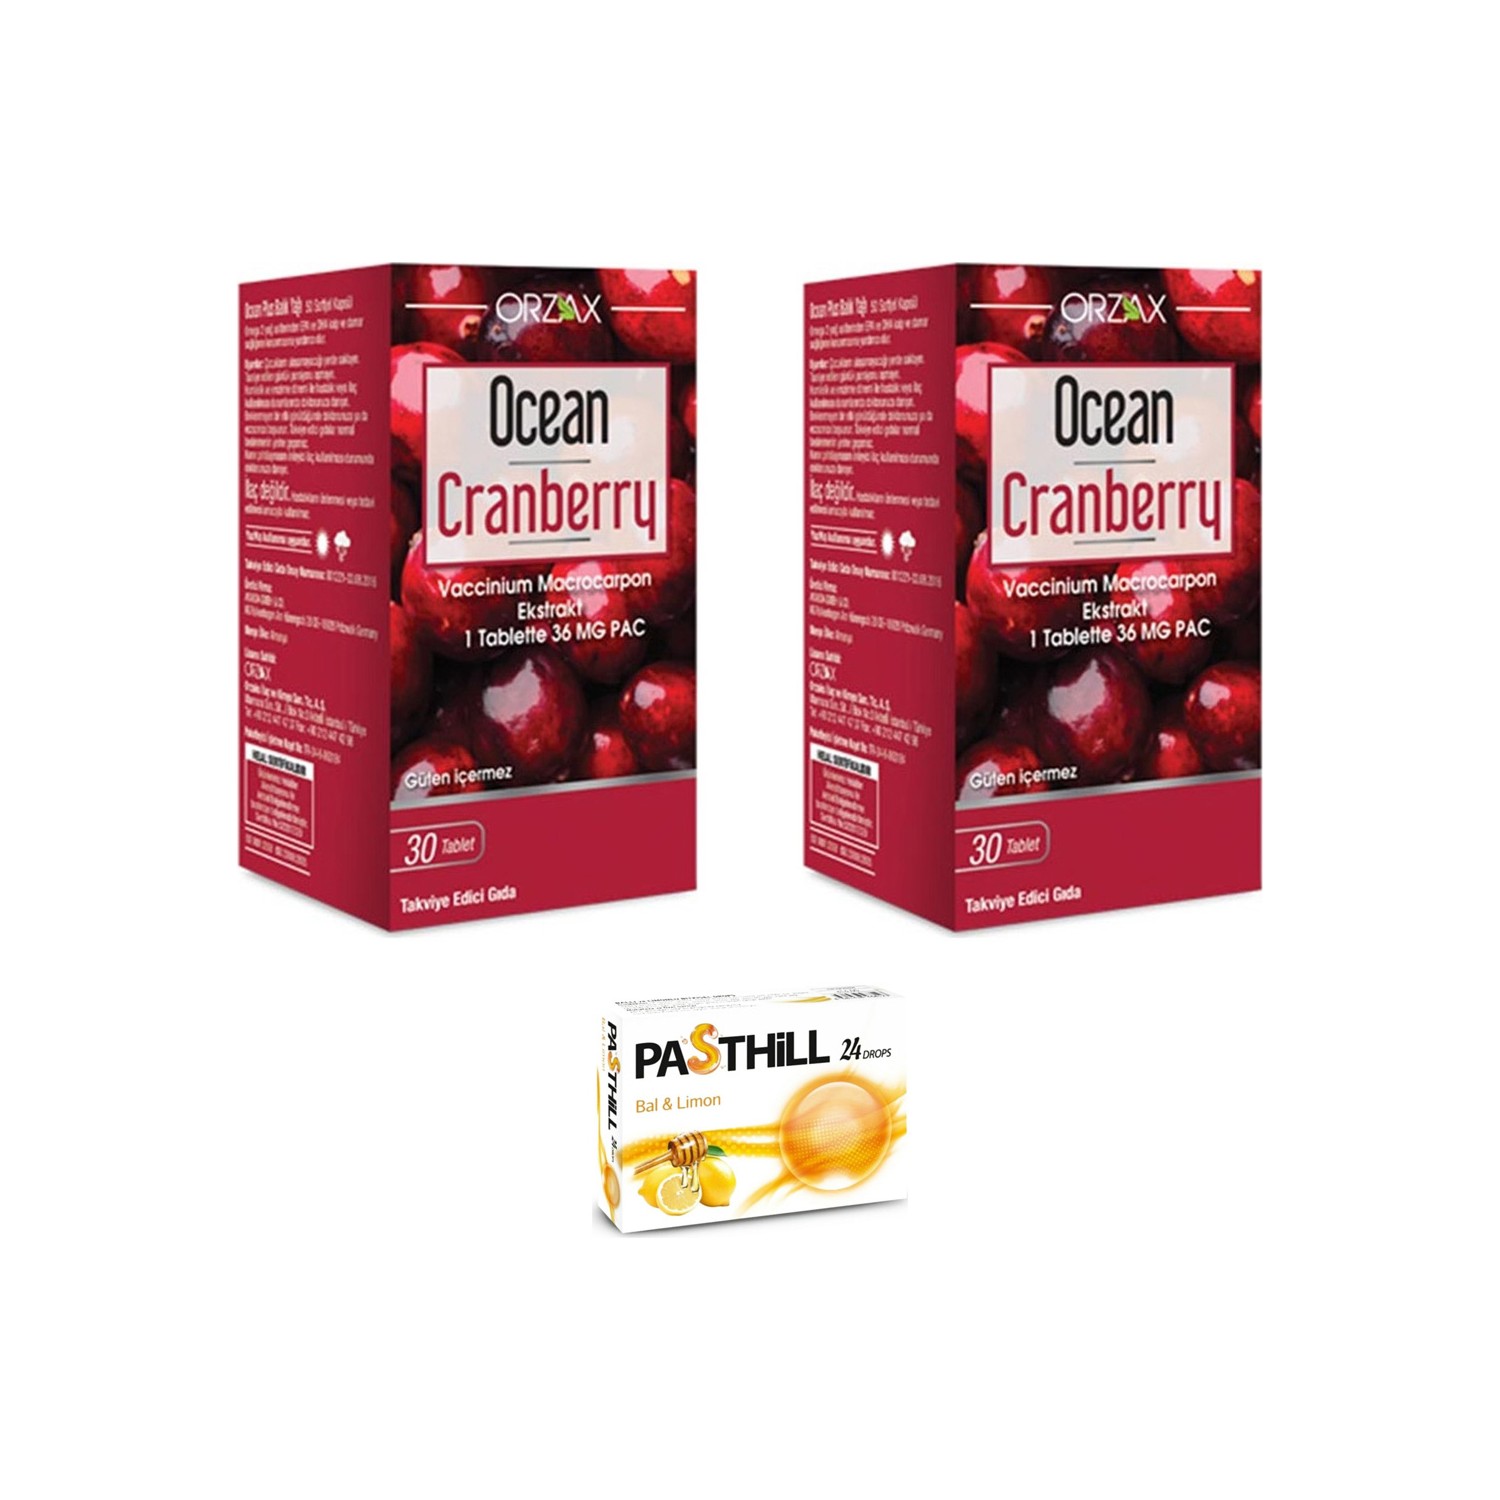 цена Пищевая добавка Orzax Ocean Cranberry, 2 упаковки по 30 таблеток + Пастилки Pasthill со вкусом меда и лимона